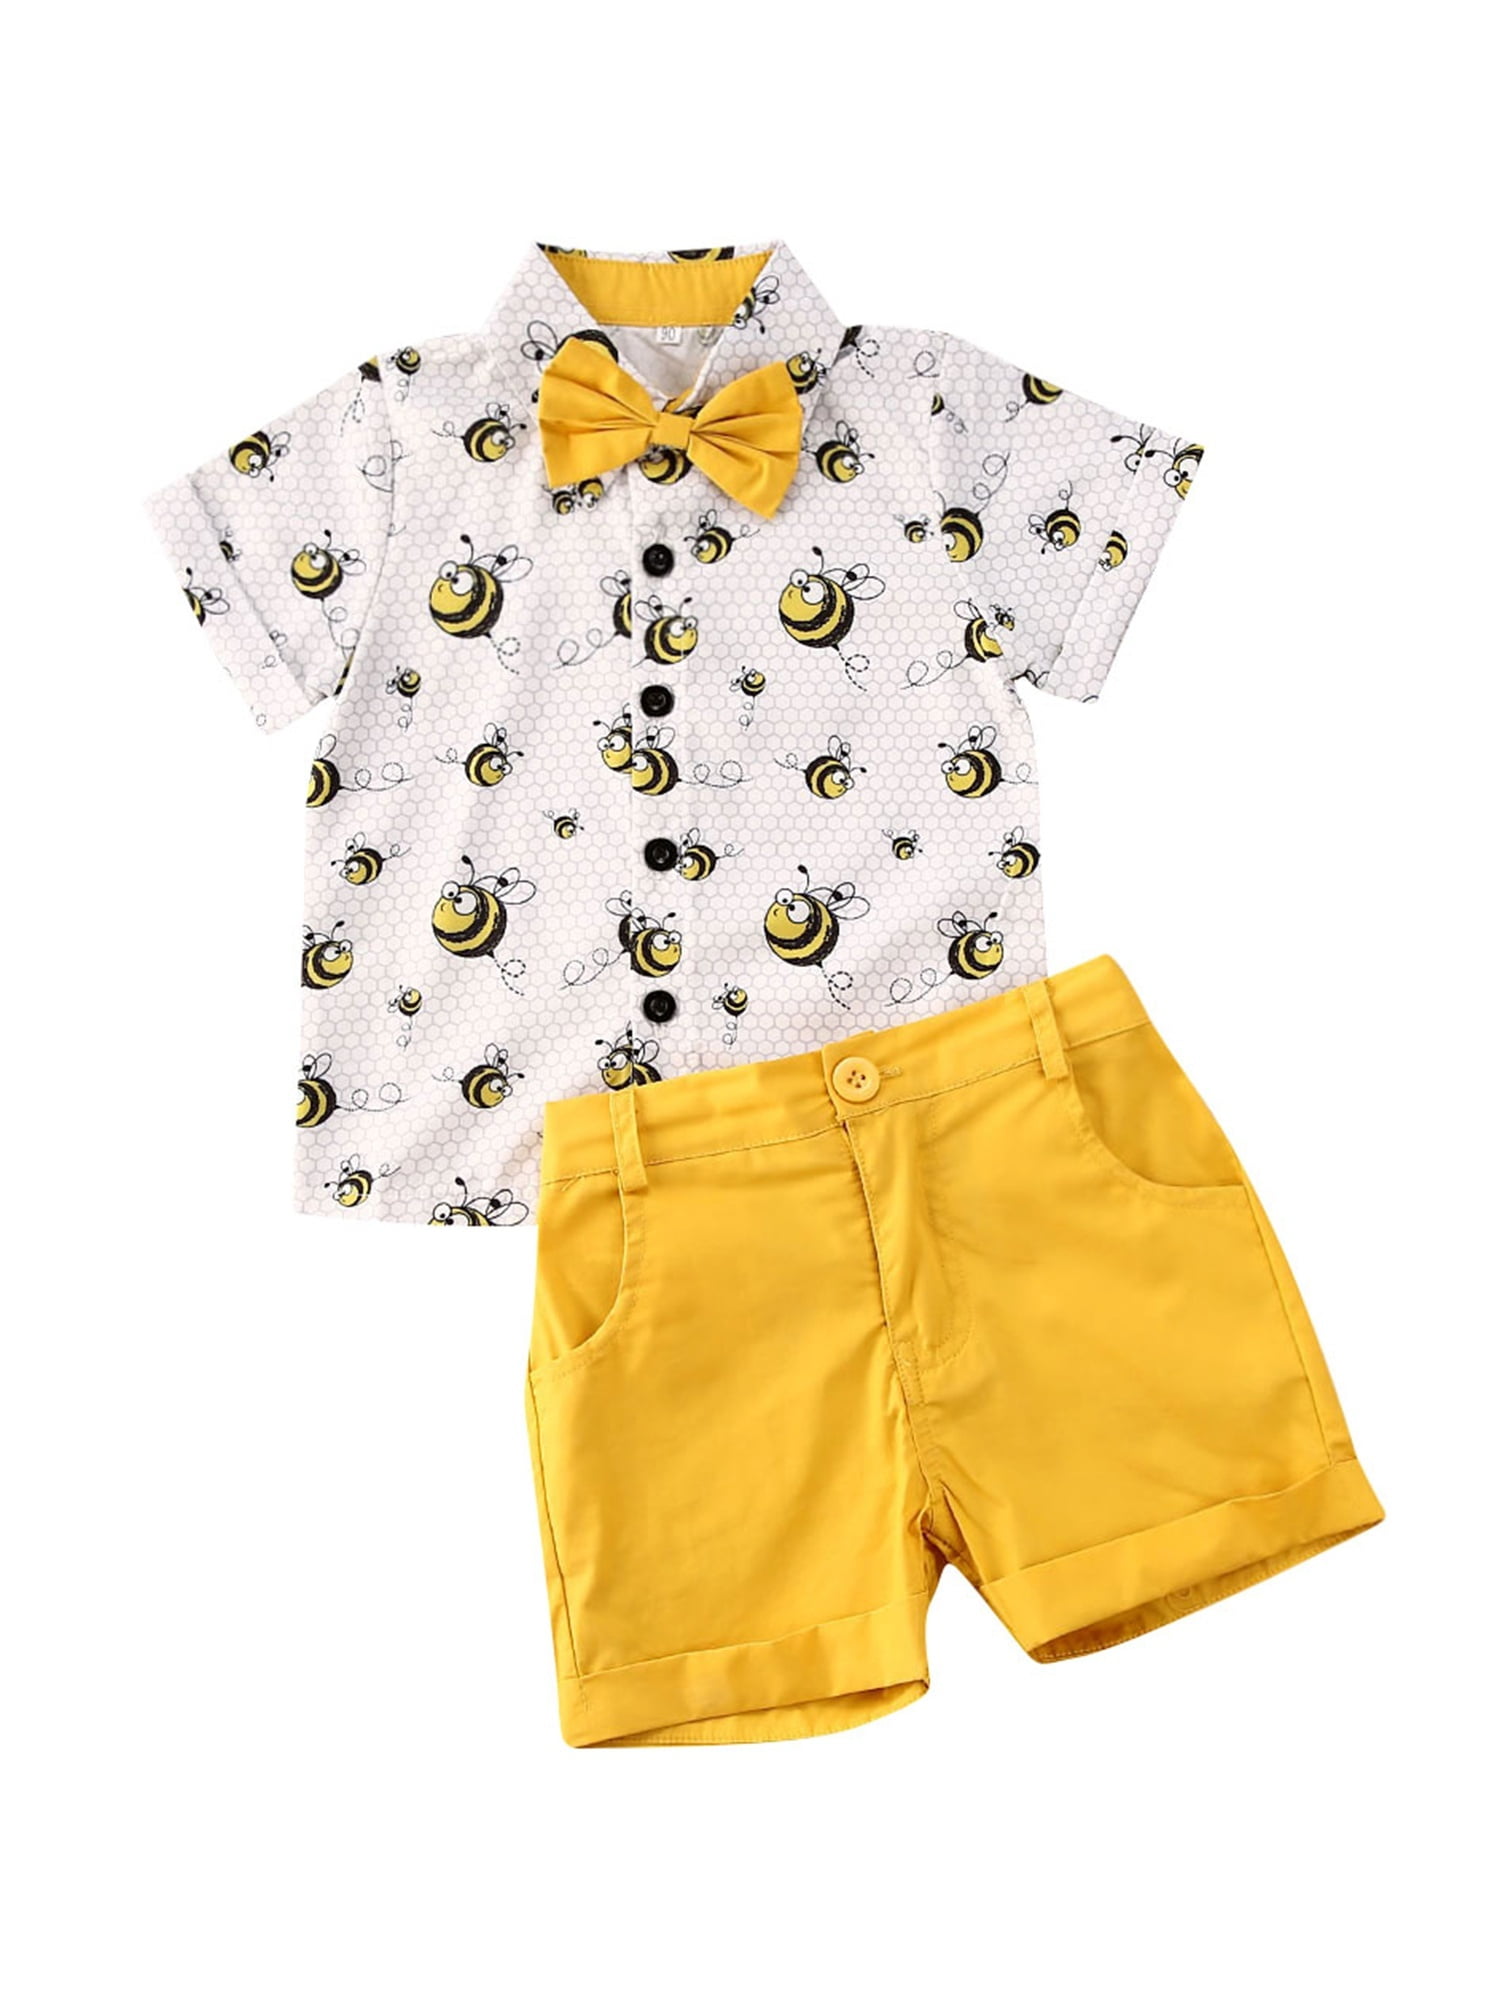 Toddler Baby Boy Summer Clothes Button Down Short Sleeve Shirts Short Pants 2pcs Gentlemen Outfits Playwear Beachwear Set 